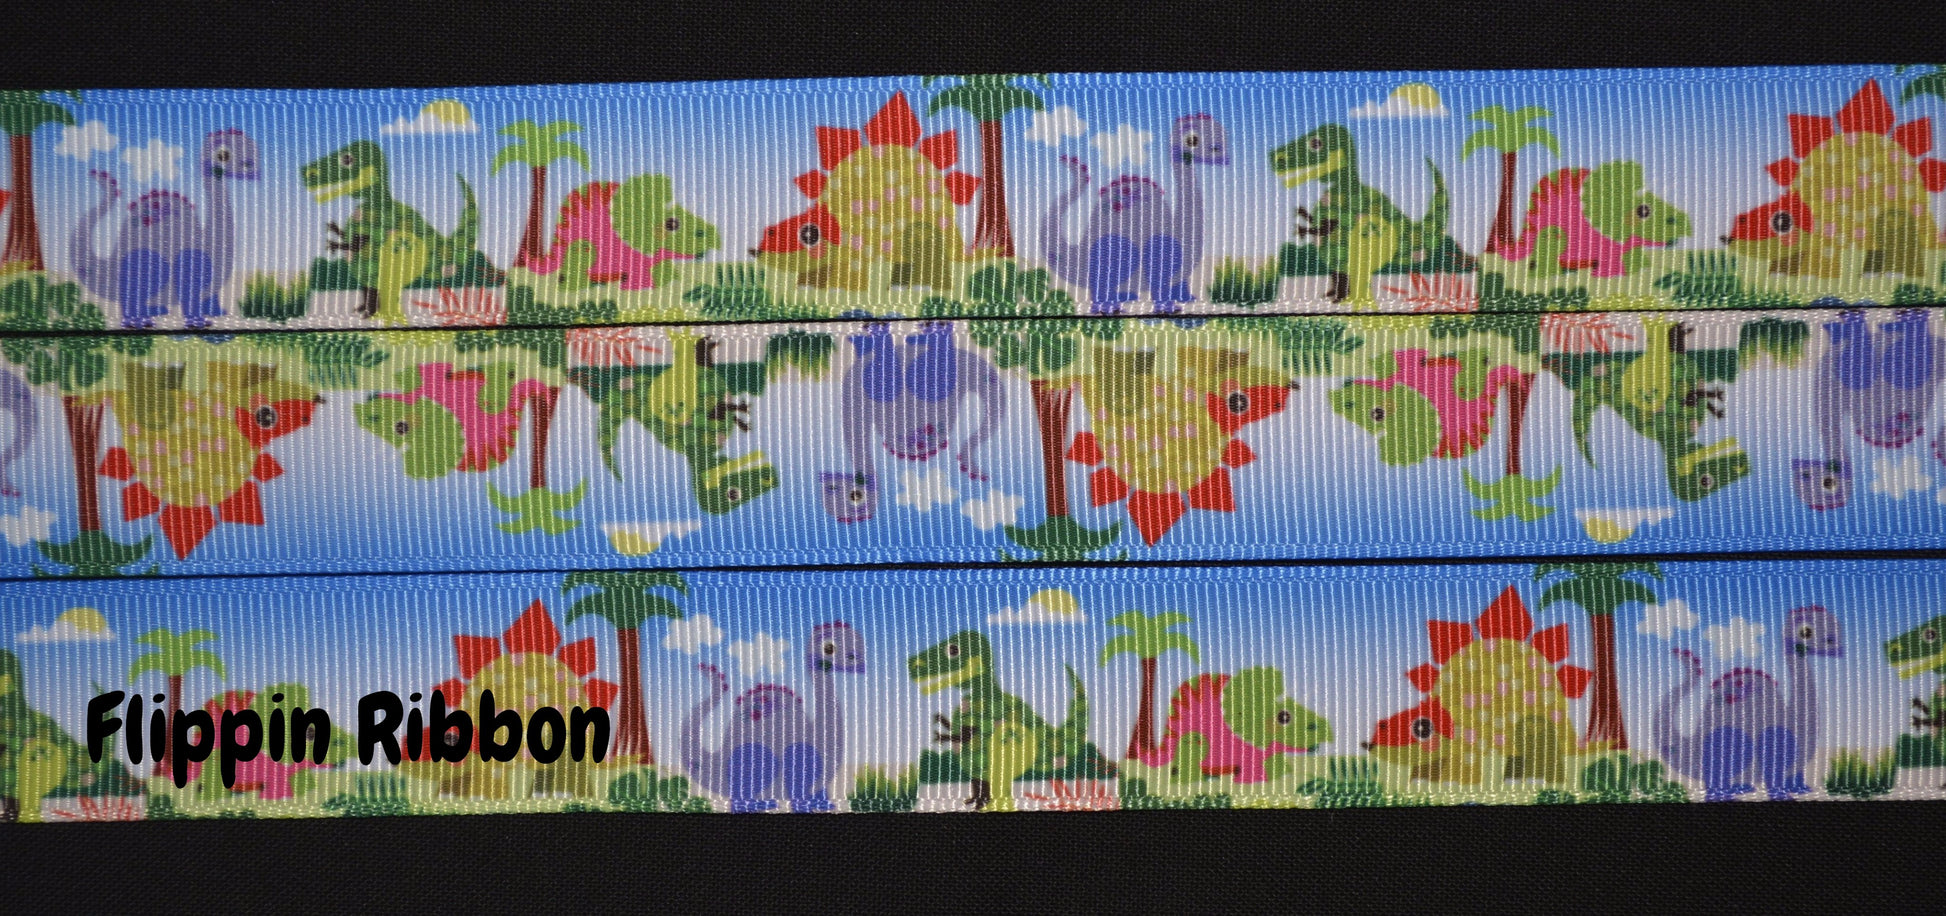 colorful dinosaur ribbon - Flippin Ribbon